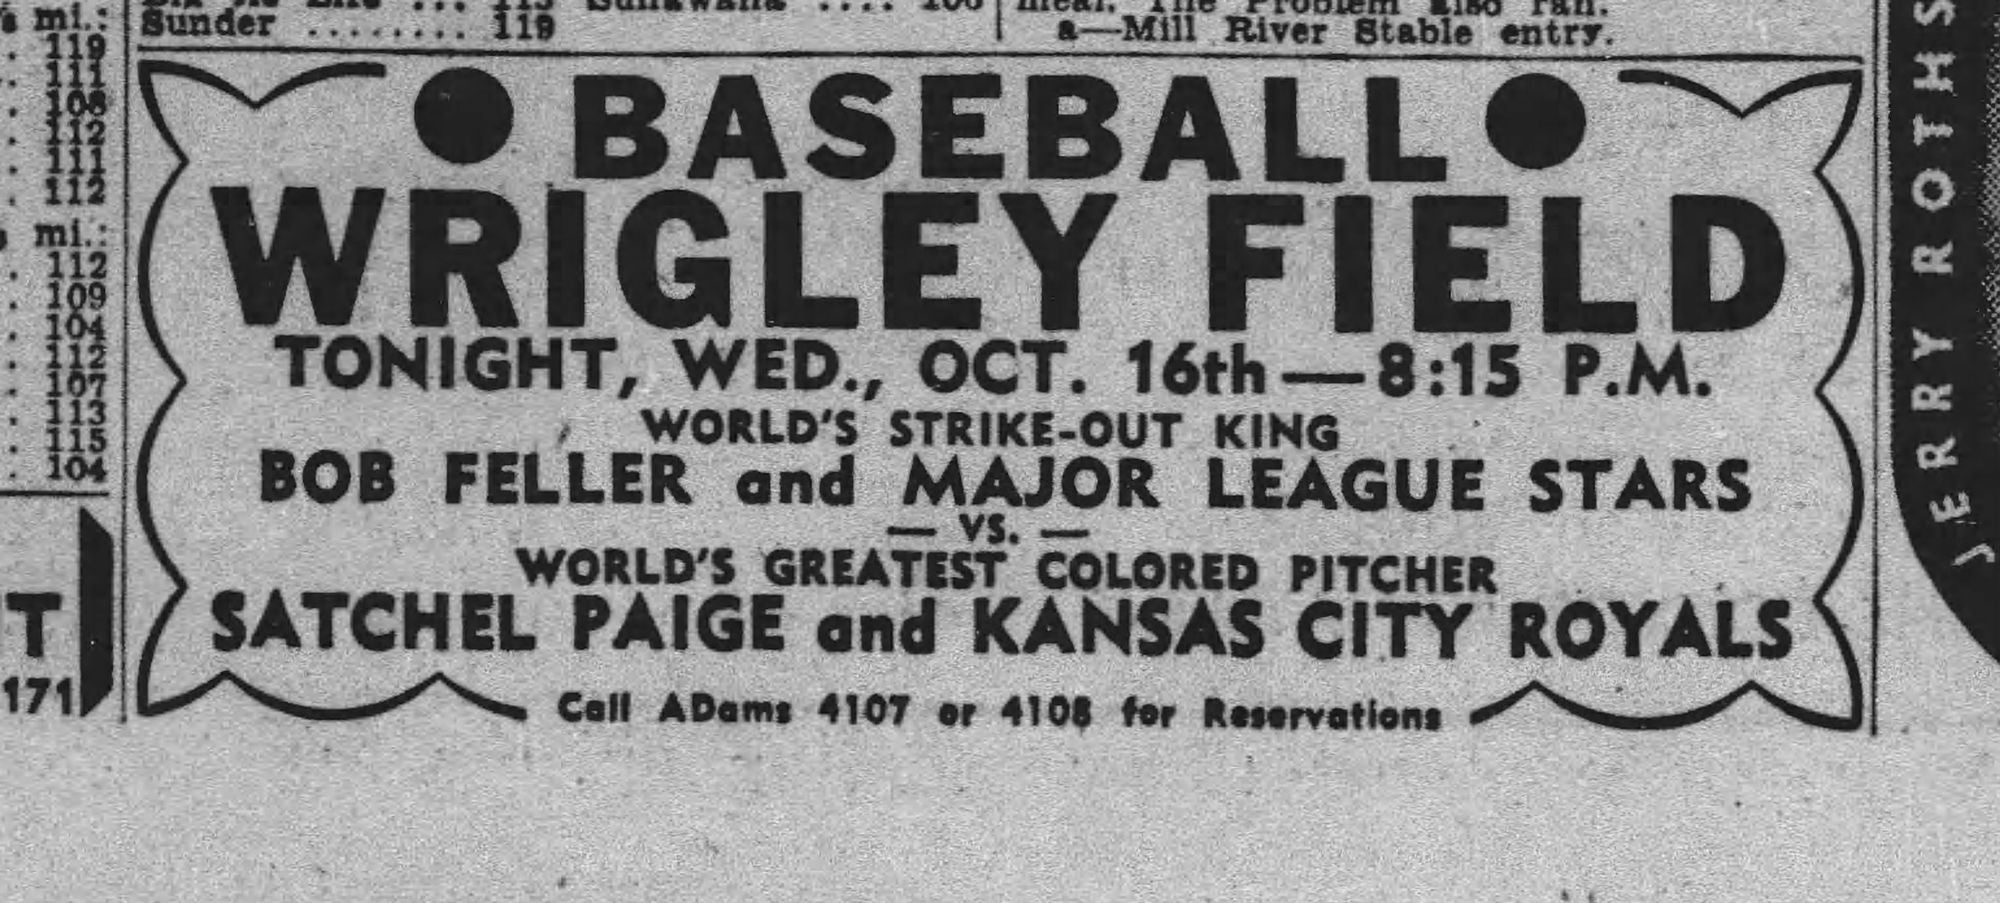 Feller, Paige teamed up for 1946 barnstorming tour | Baseball Hall ...